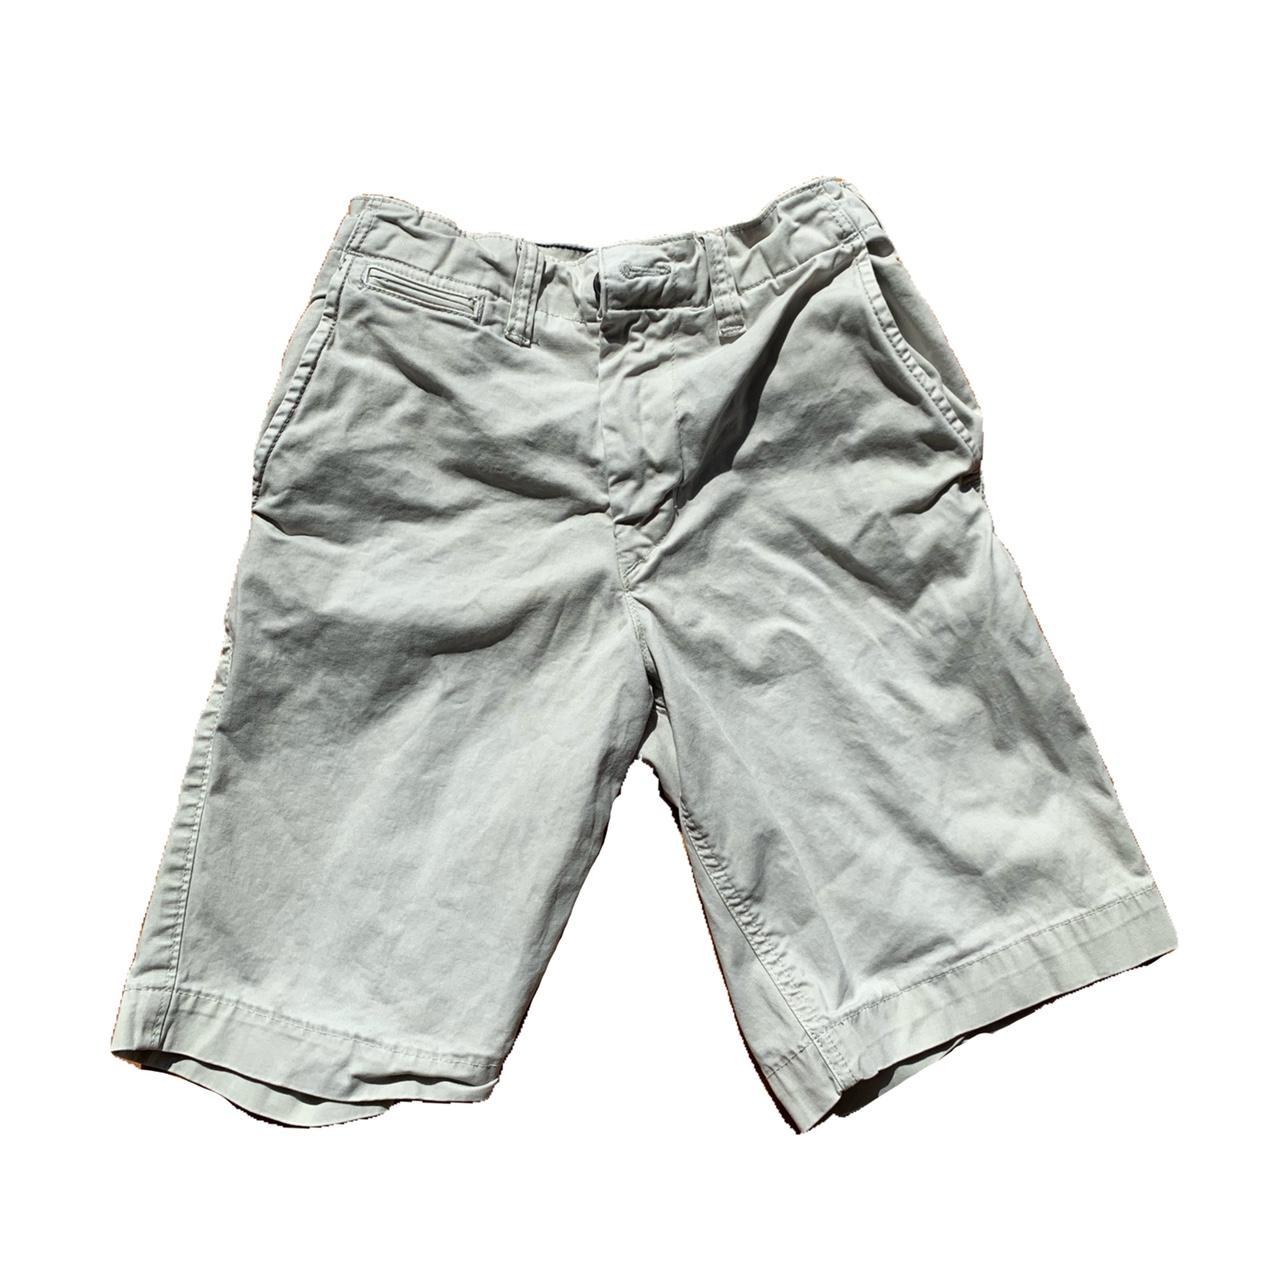 Product Image 1 - Grey cargo shorts

Size 26
10/10 condition
Us